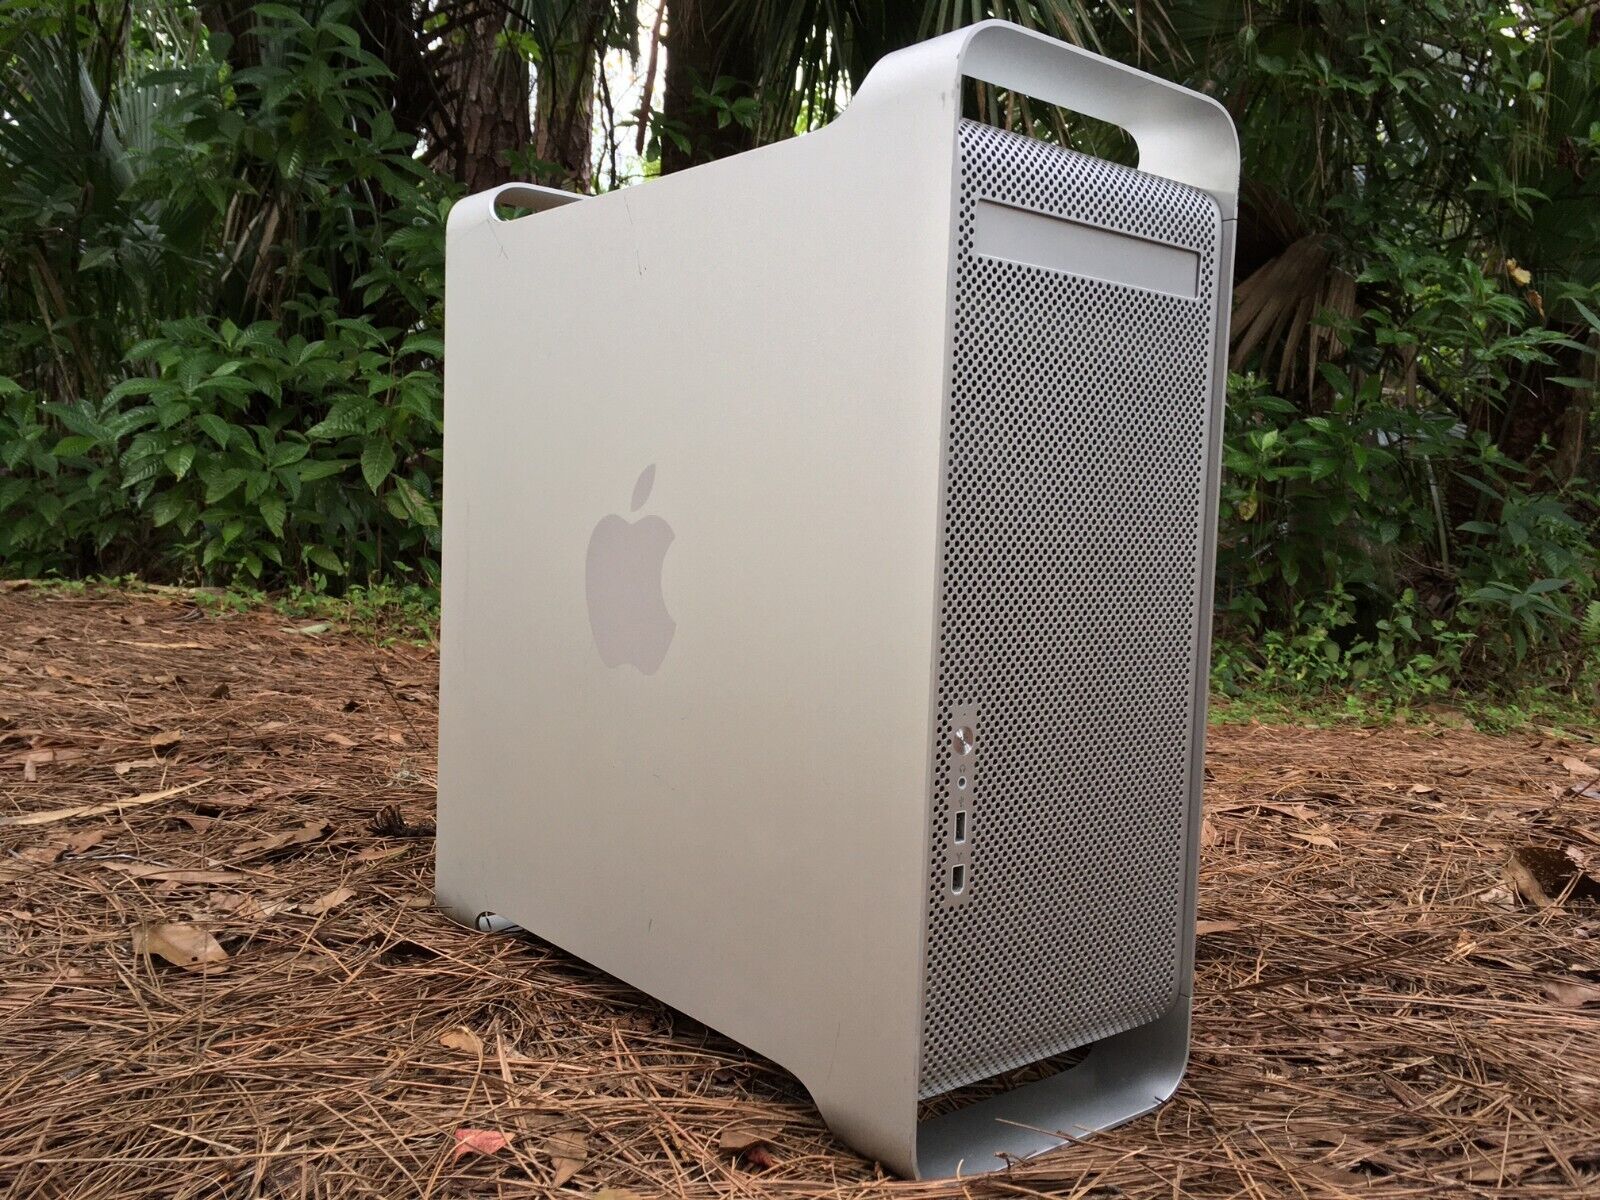 Apple Power Mac G5 2.0 GHz DP 3 GB RAM Radeon 9600 Pro 160 GB HD A1047 M9032LL/A